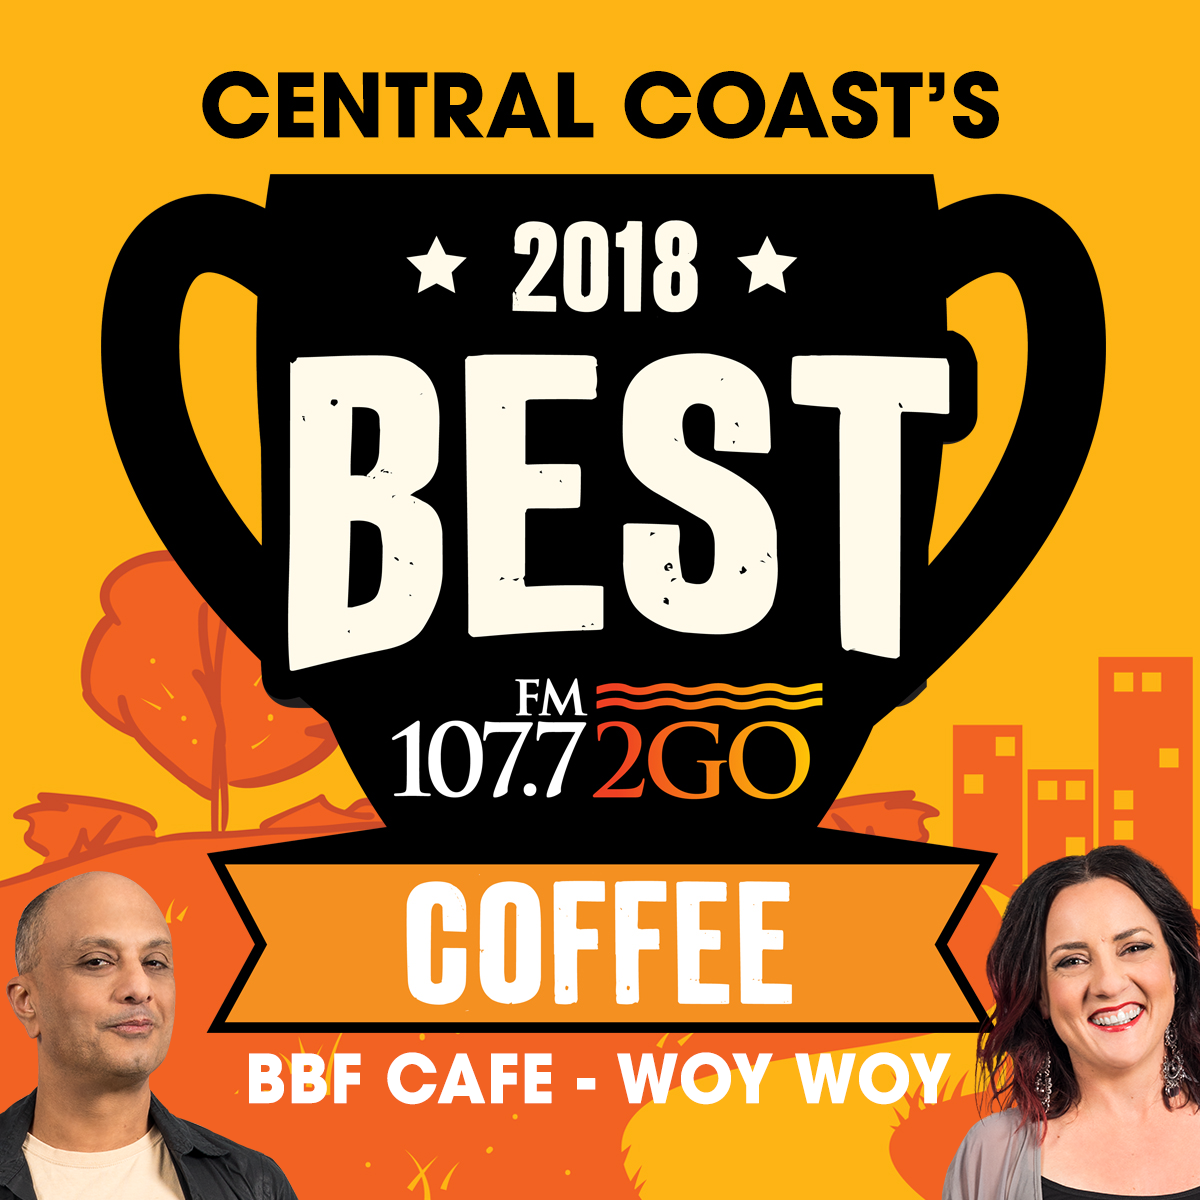 Central Coast's Best Coffee Is In Woy Woy!